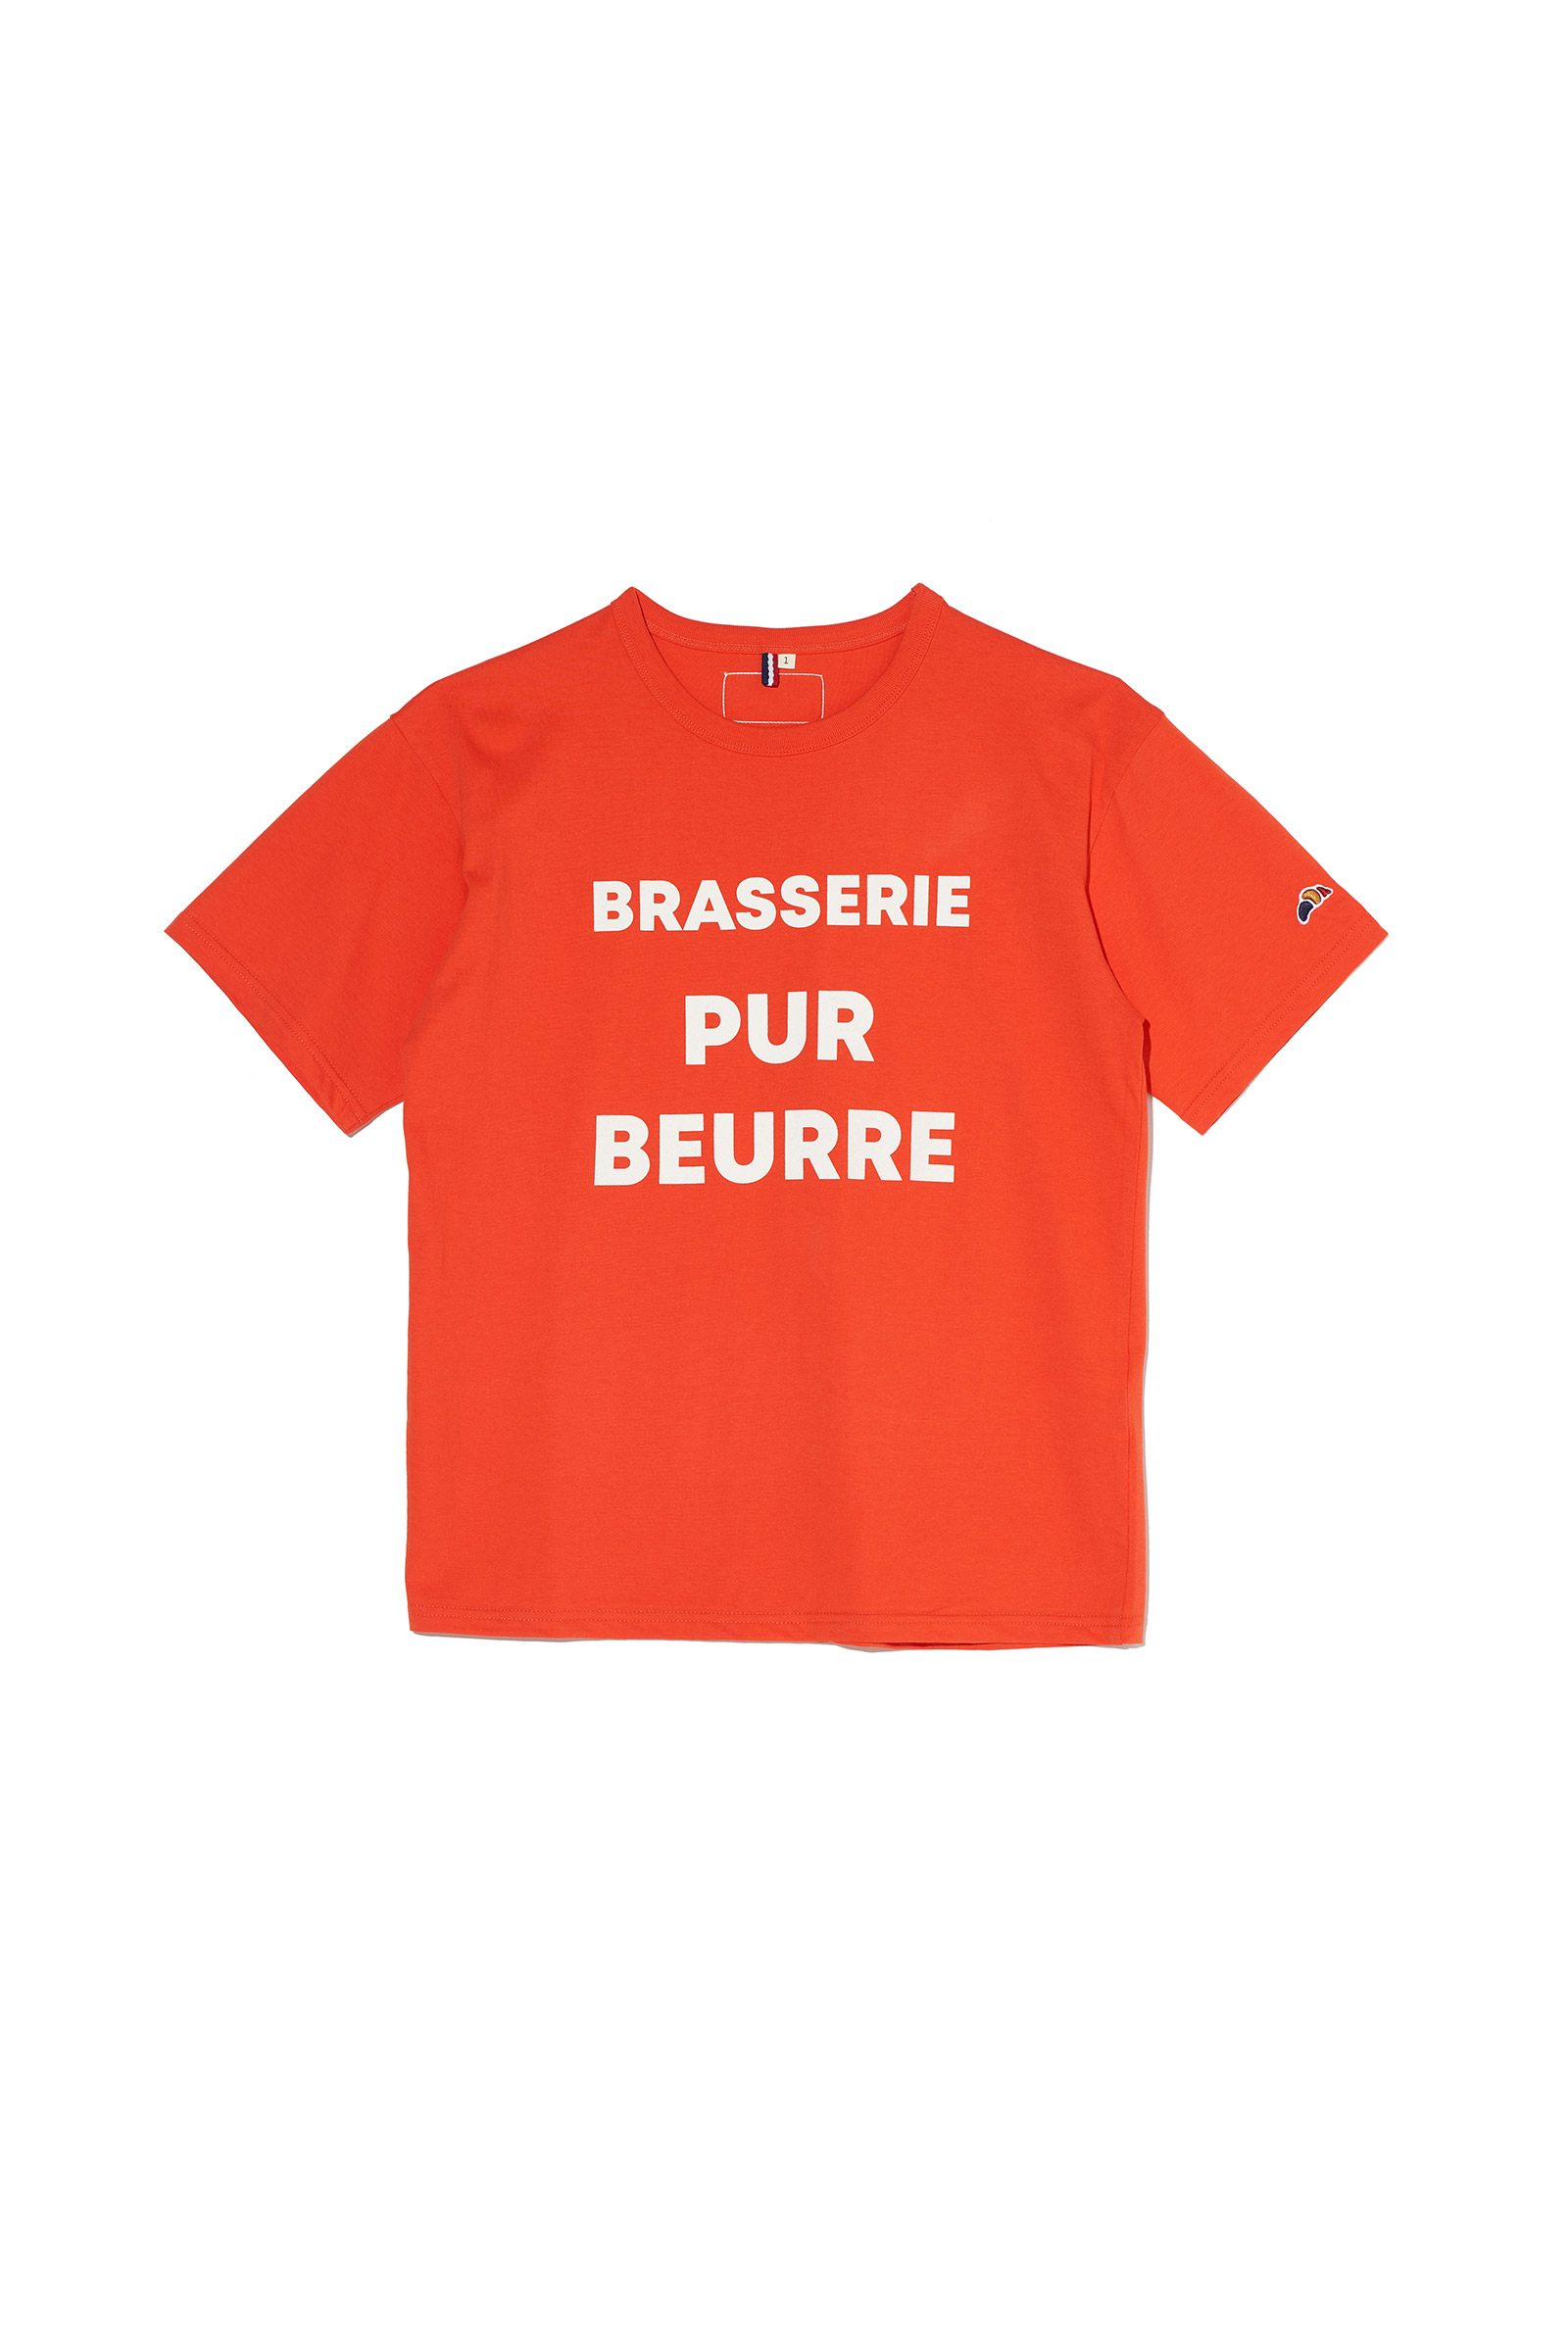 ep.4 Pur Beurre T-shirts (Orange)